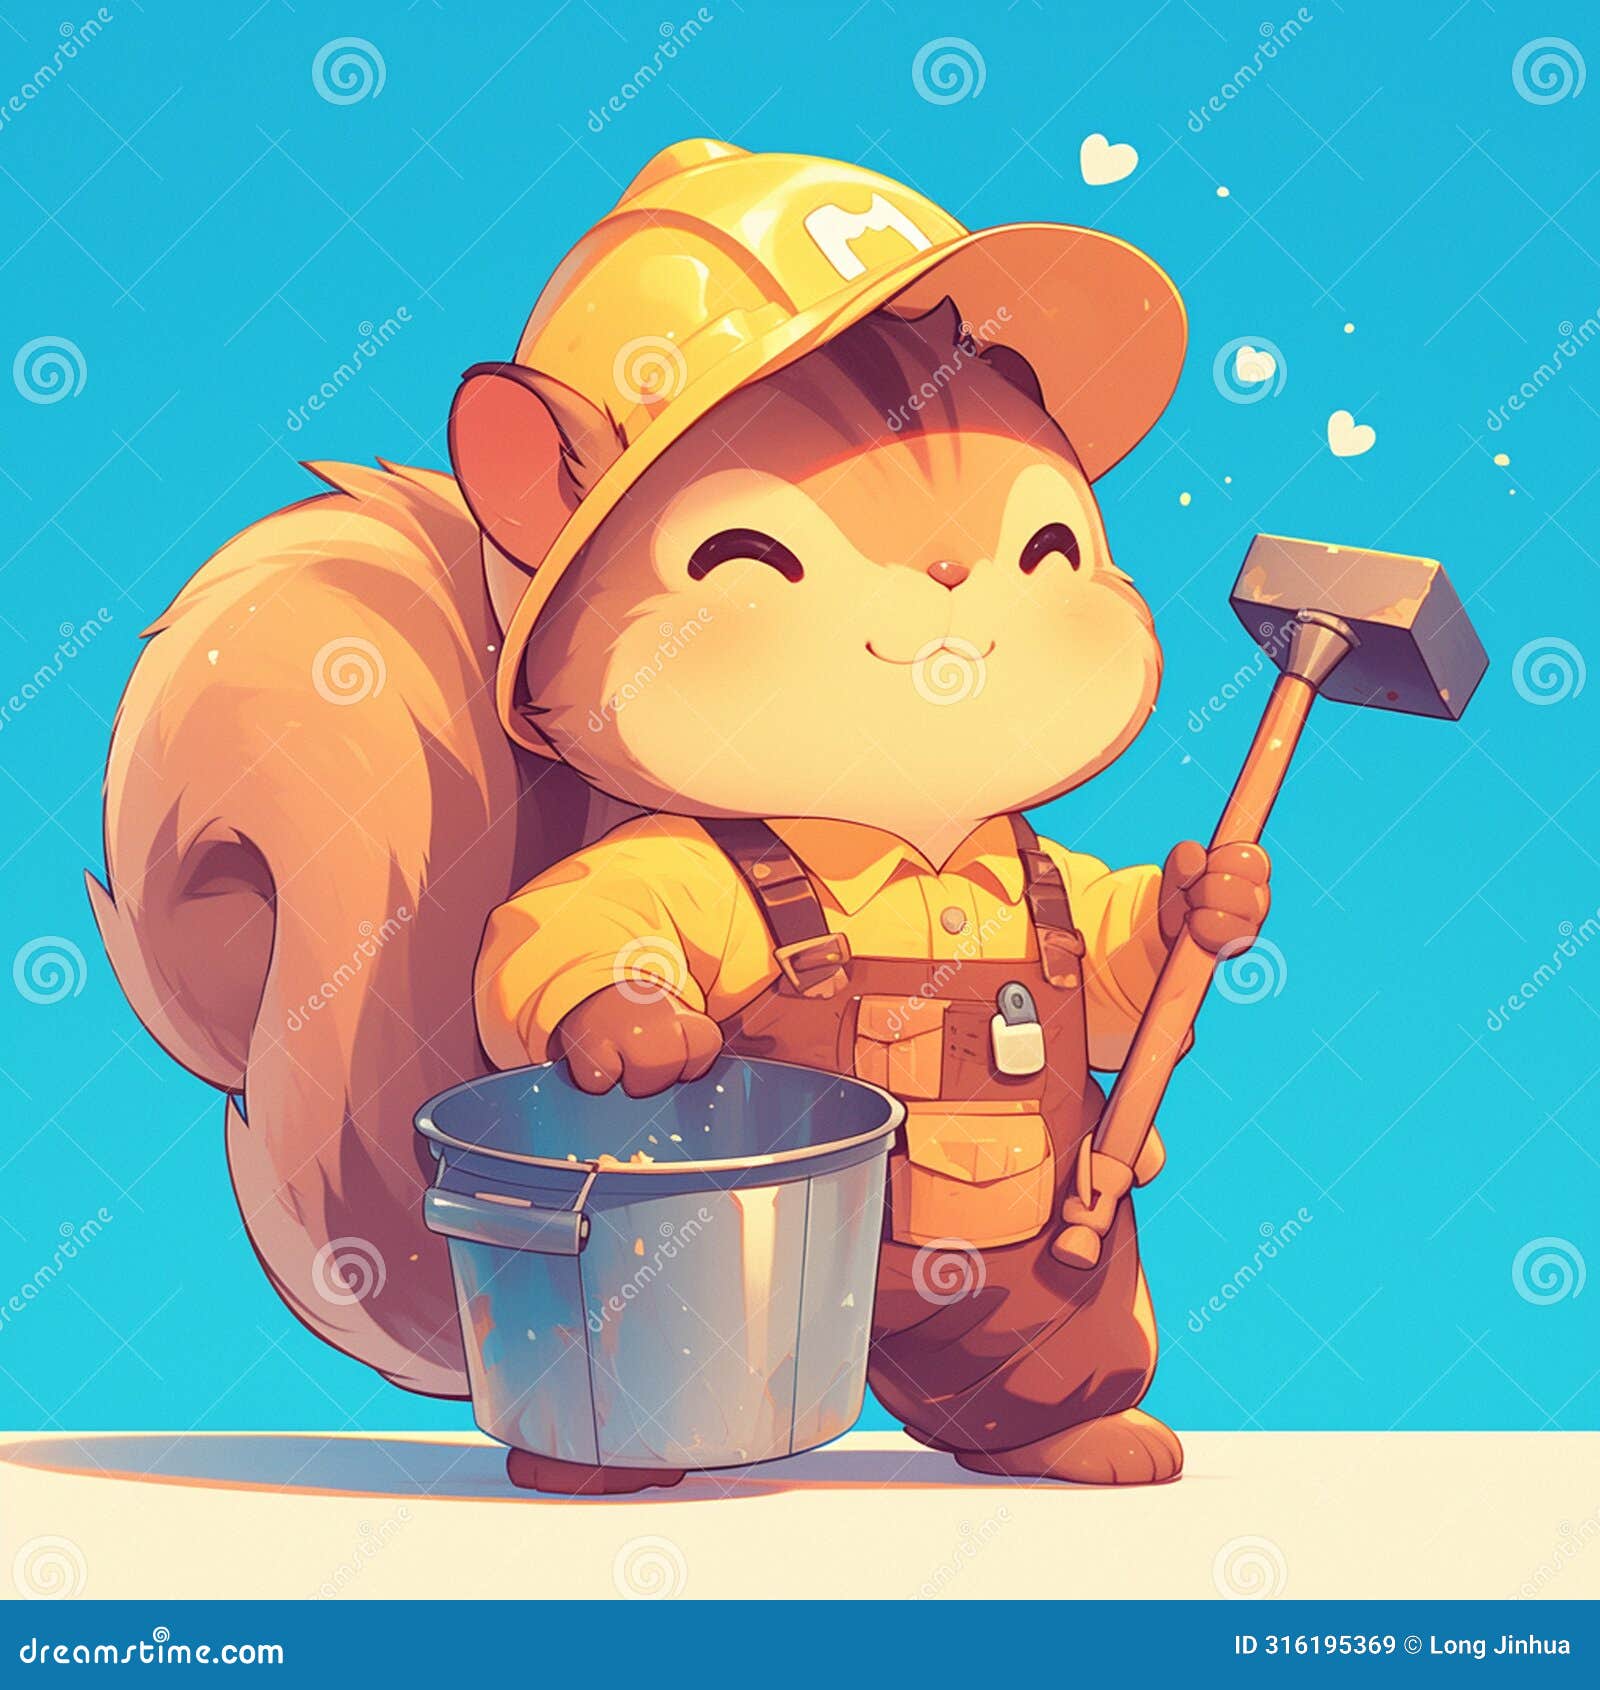 a nimble squirrel sanitation worker cartoon style